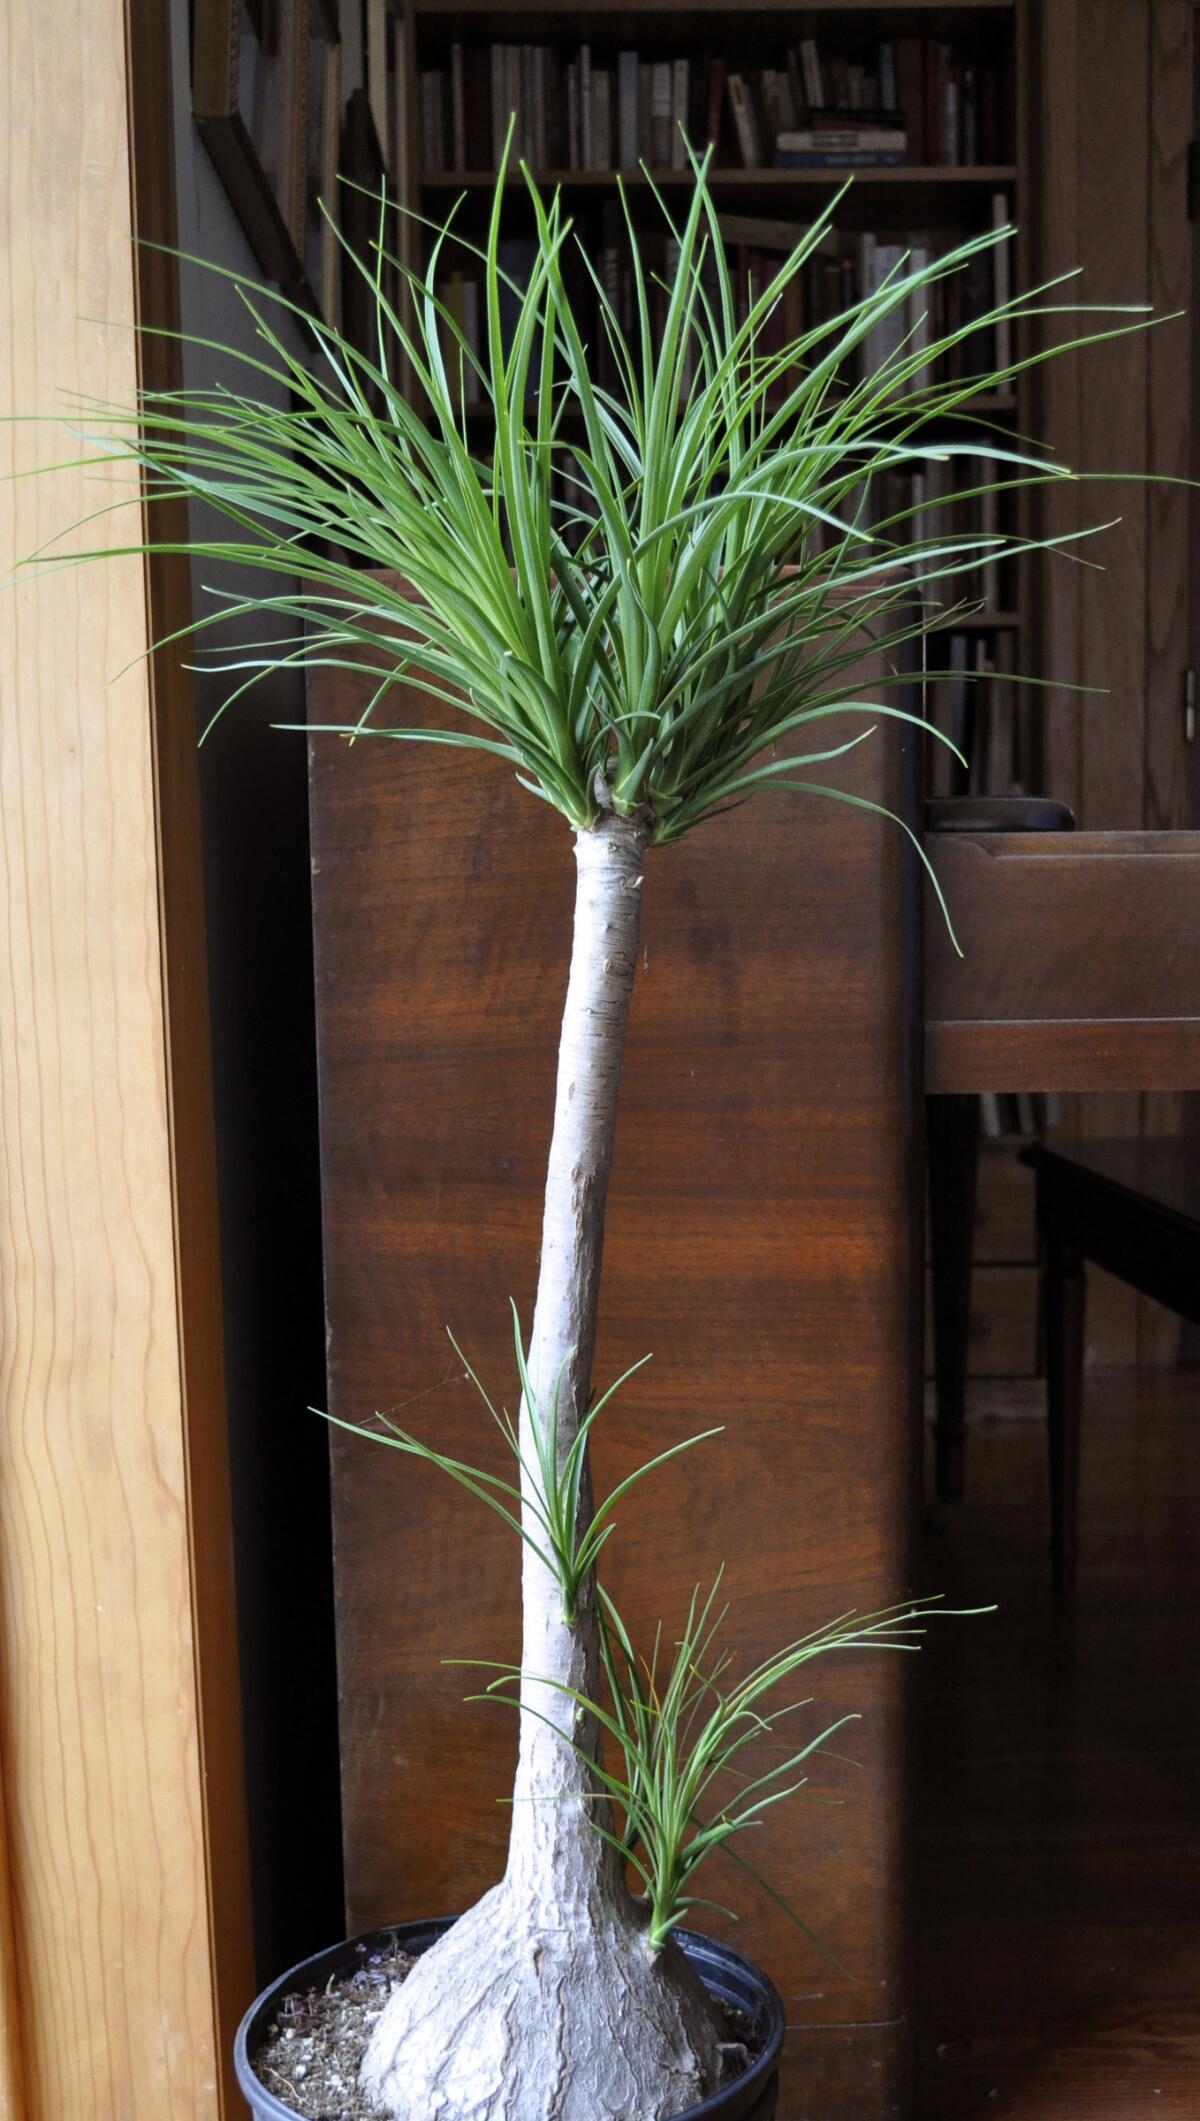 Ponytail palm, beaucarnea recurvata